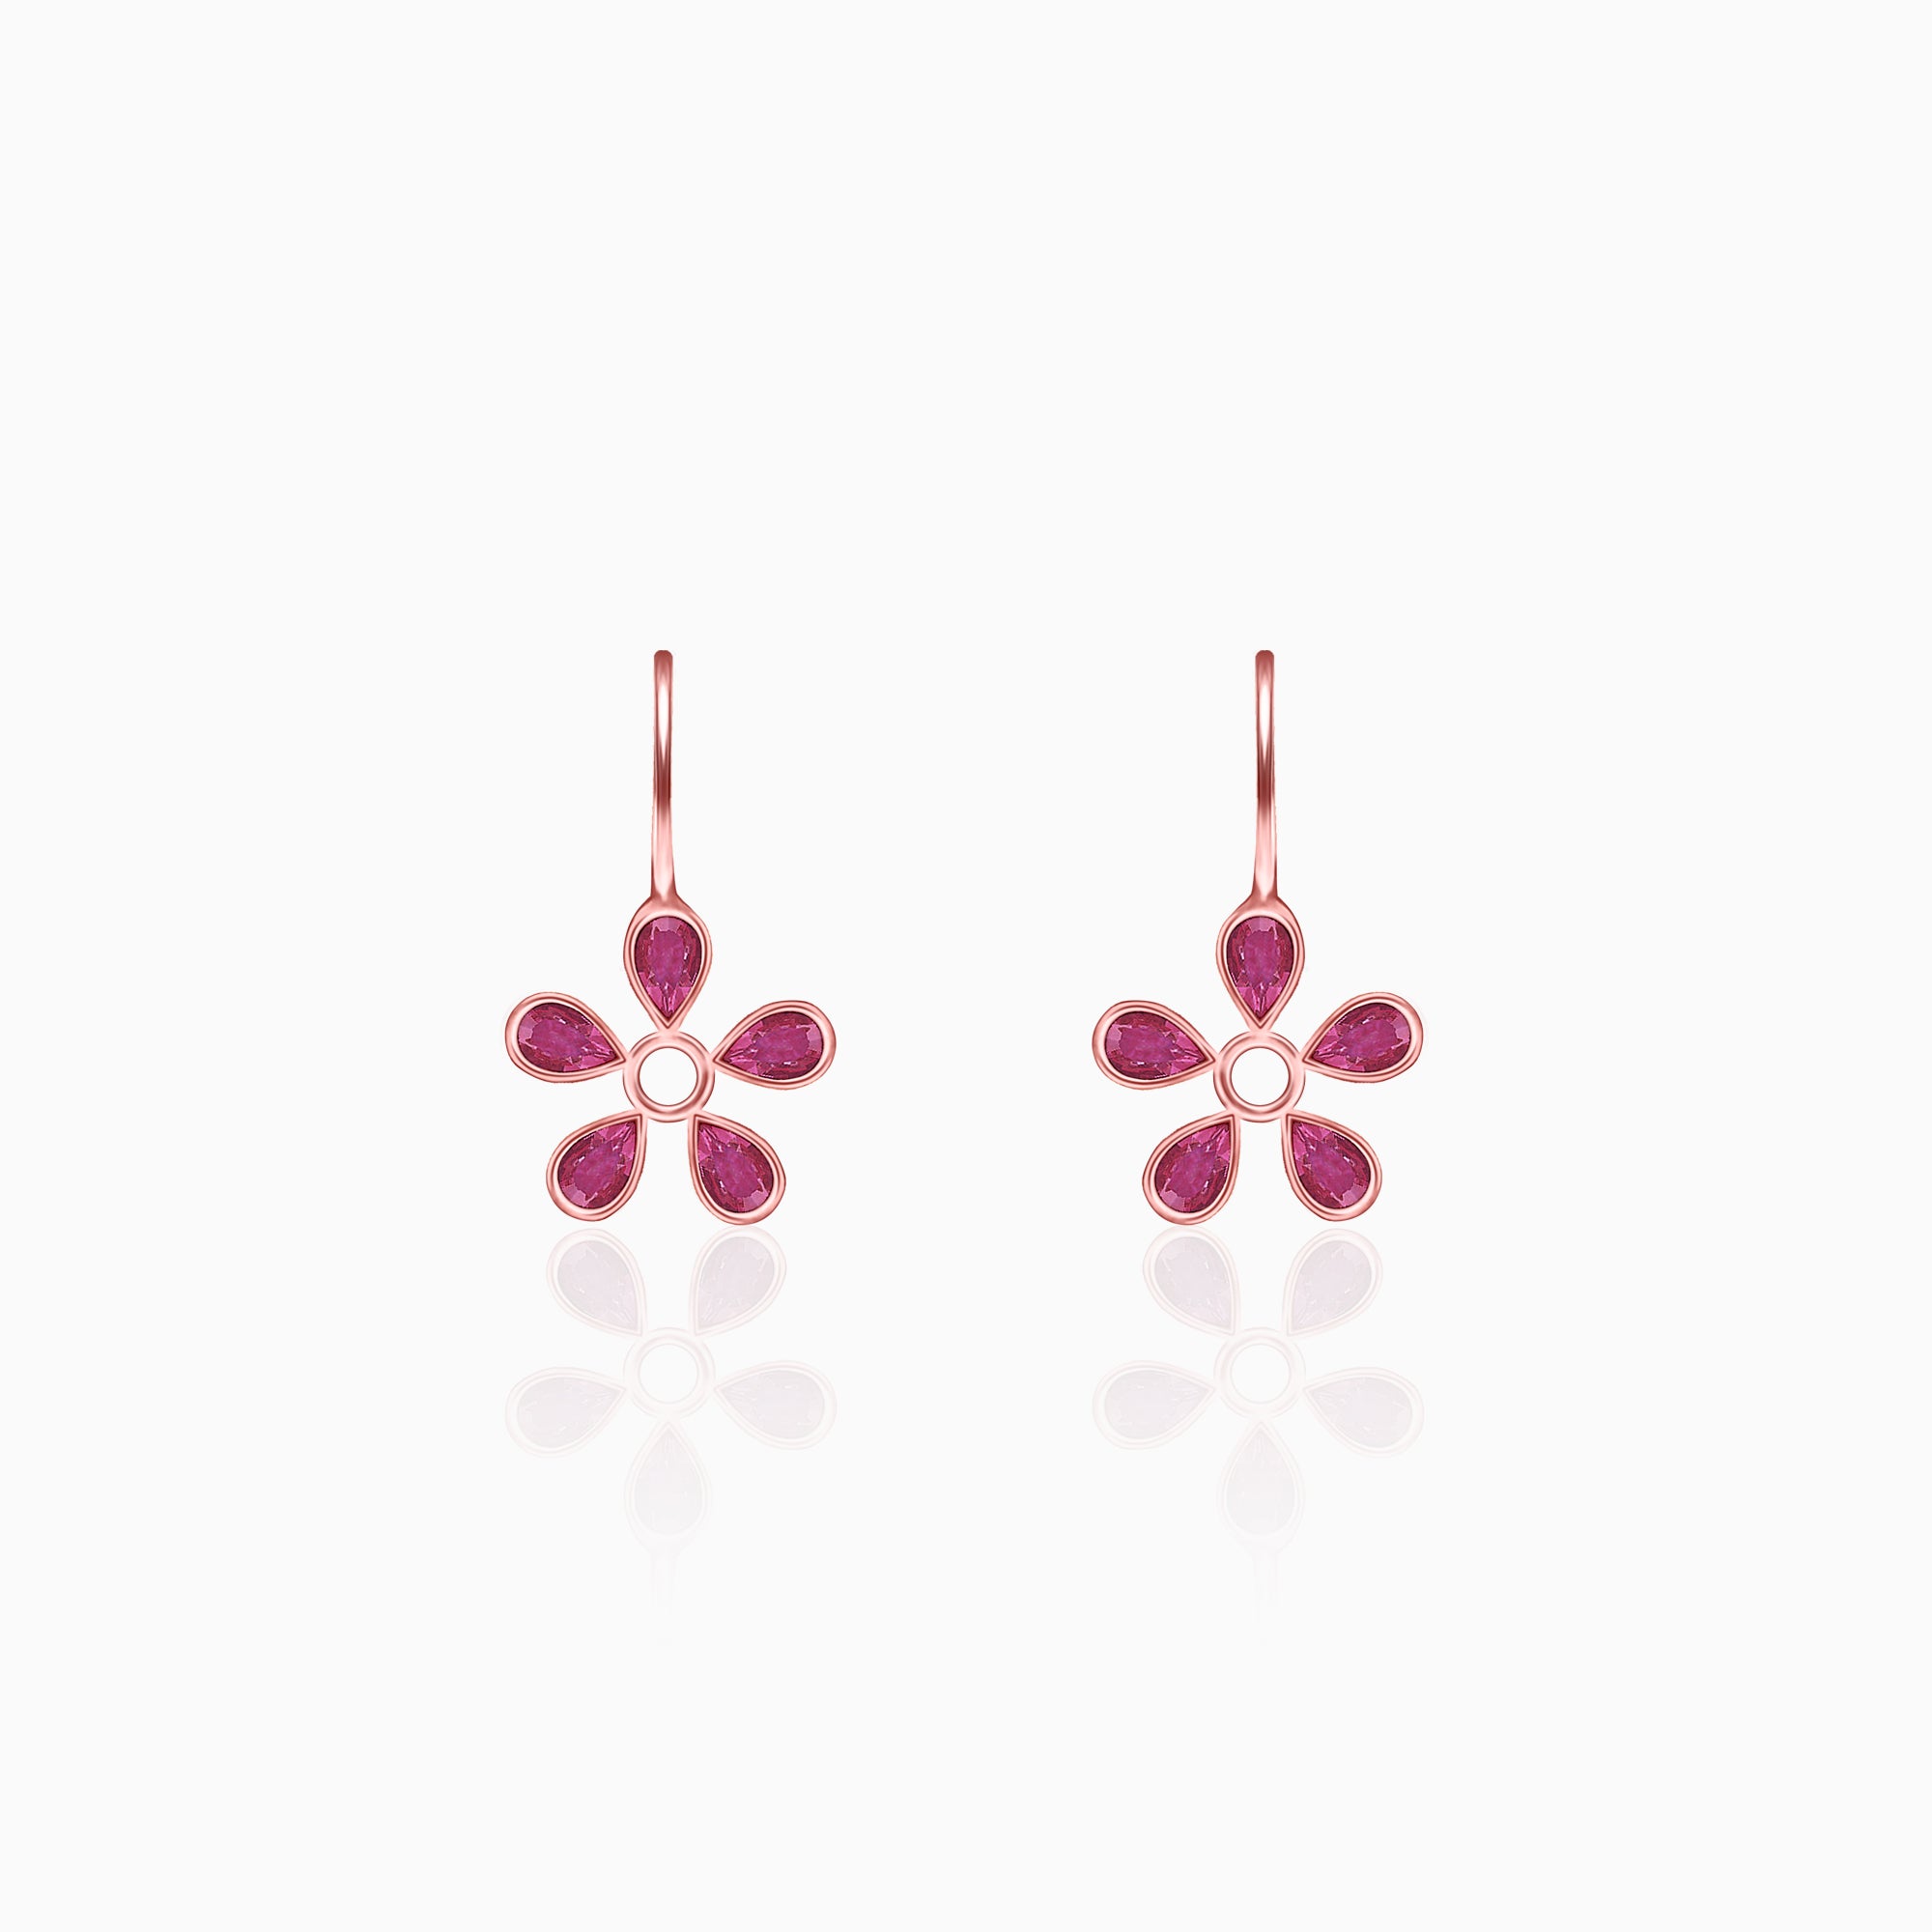 Cherry Blossom Earrings - Gold Flower Studs | Helen Ficalora